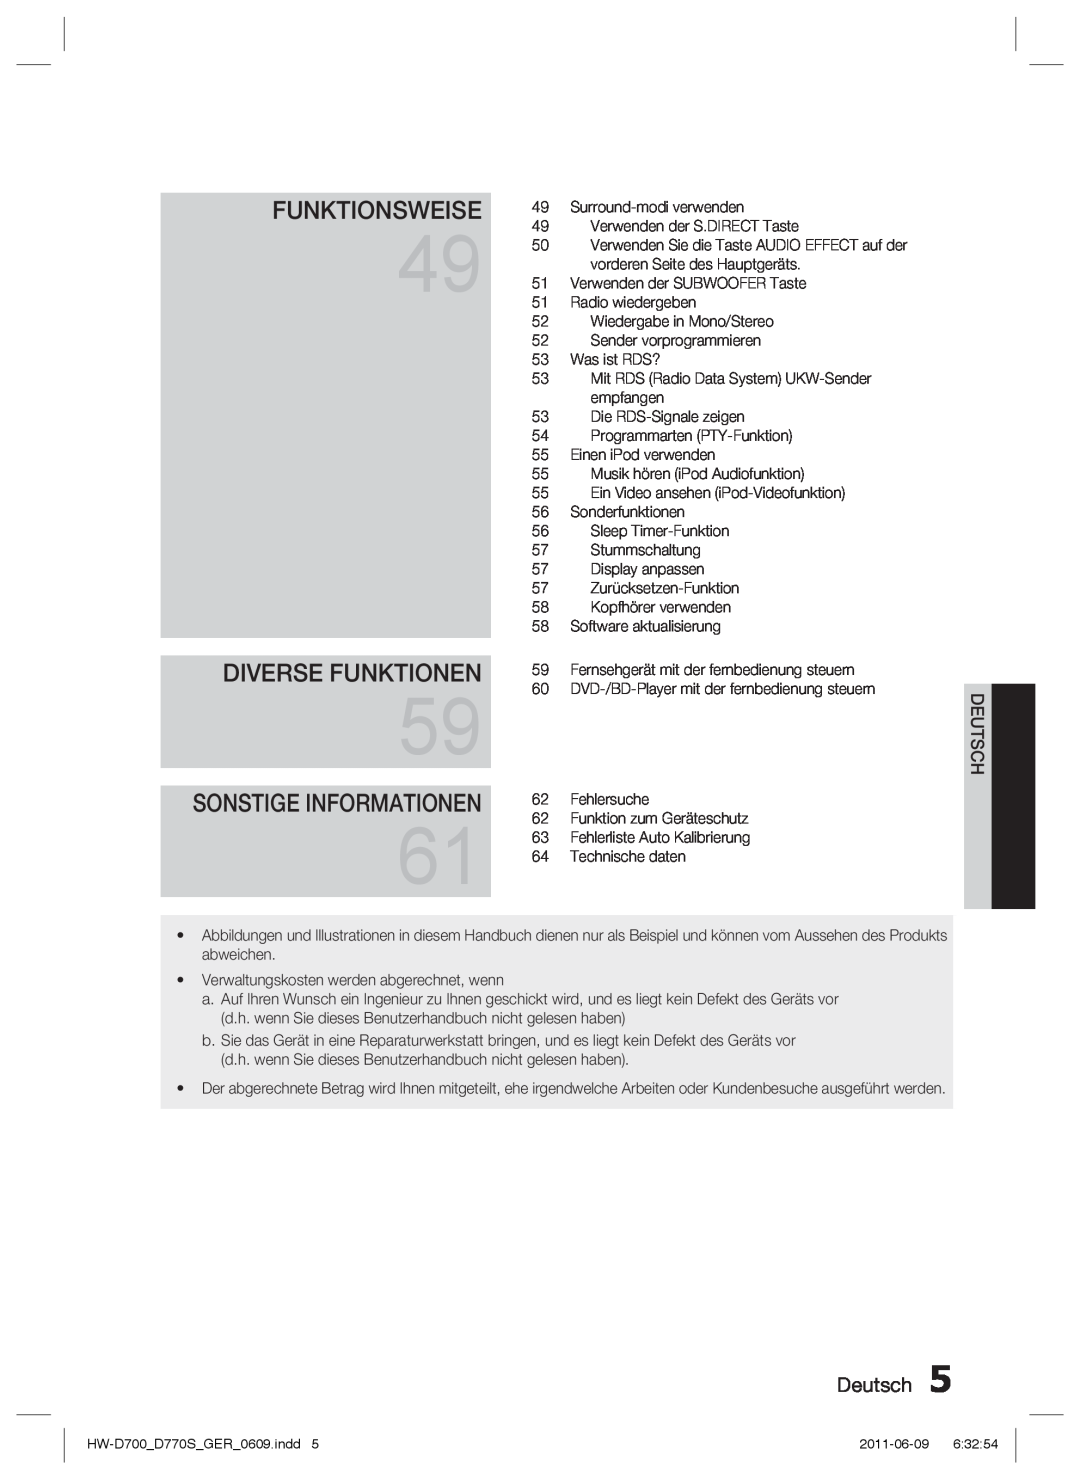 Samsung HW-D700/EN, HW-D770S/EN manual Funktionsweise, Diverse Funktionen, Sonstige Informationen, Deutsch 